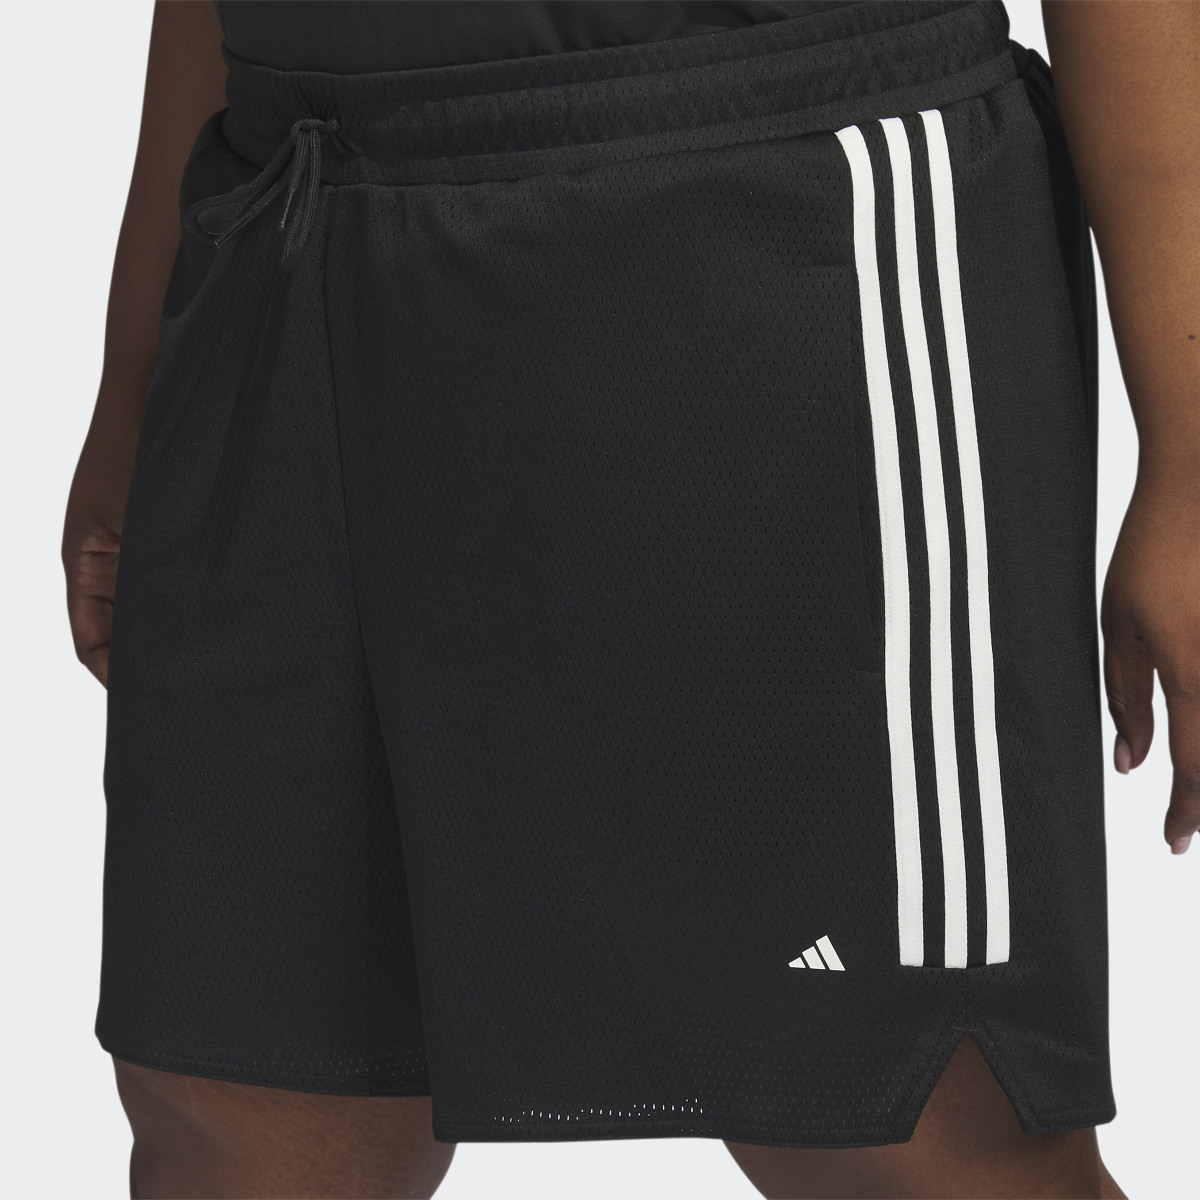 Adidas Select 3-Stripes Basketball Shorts (Plus Size). 5